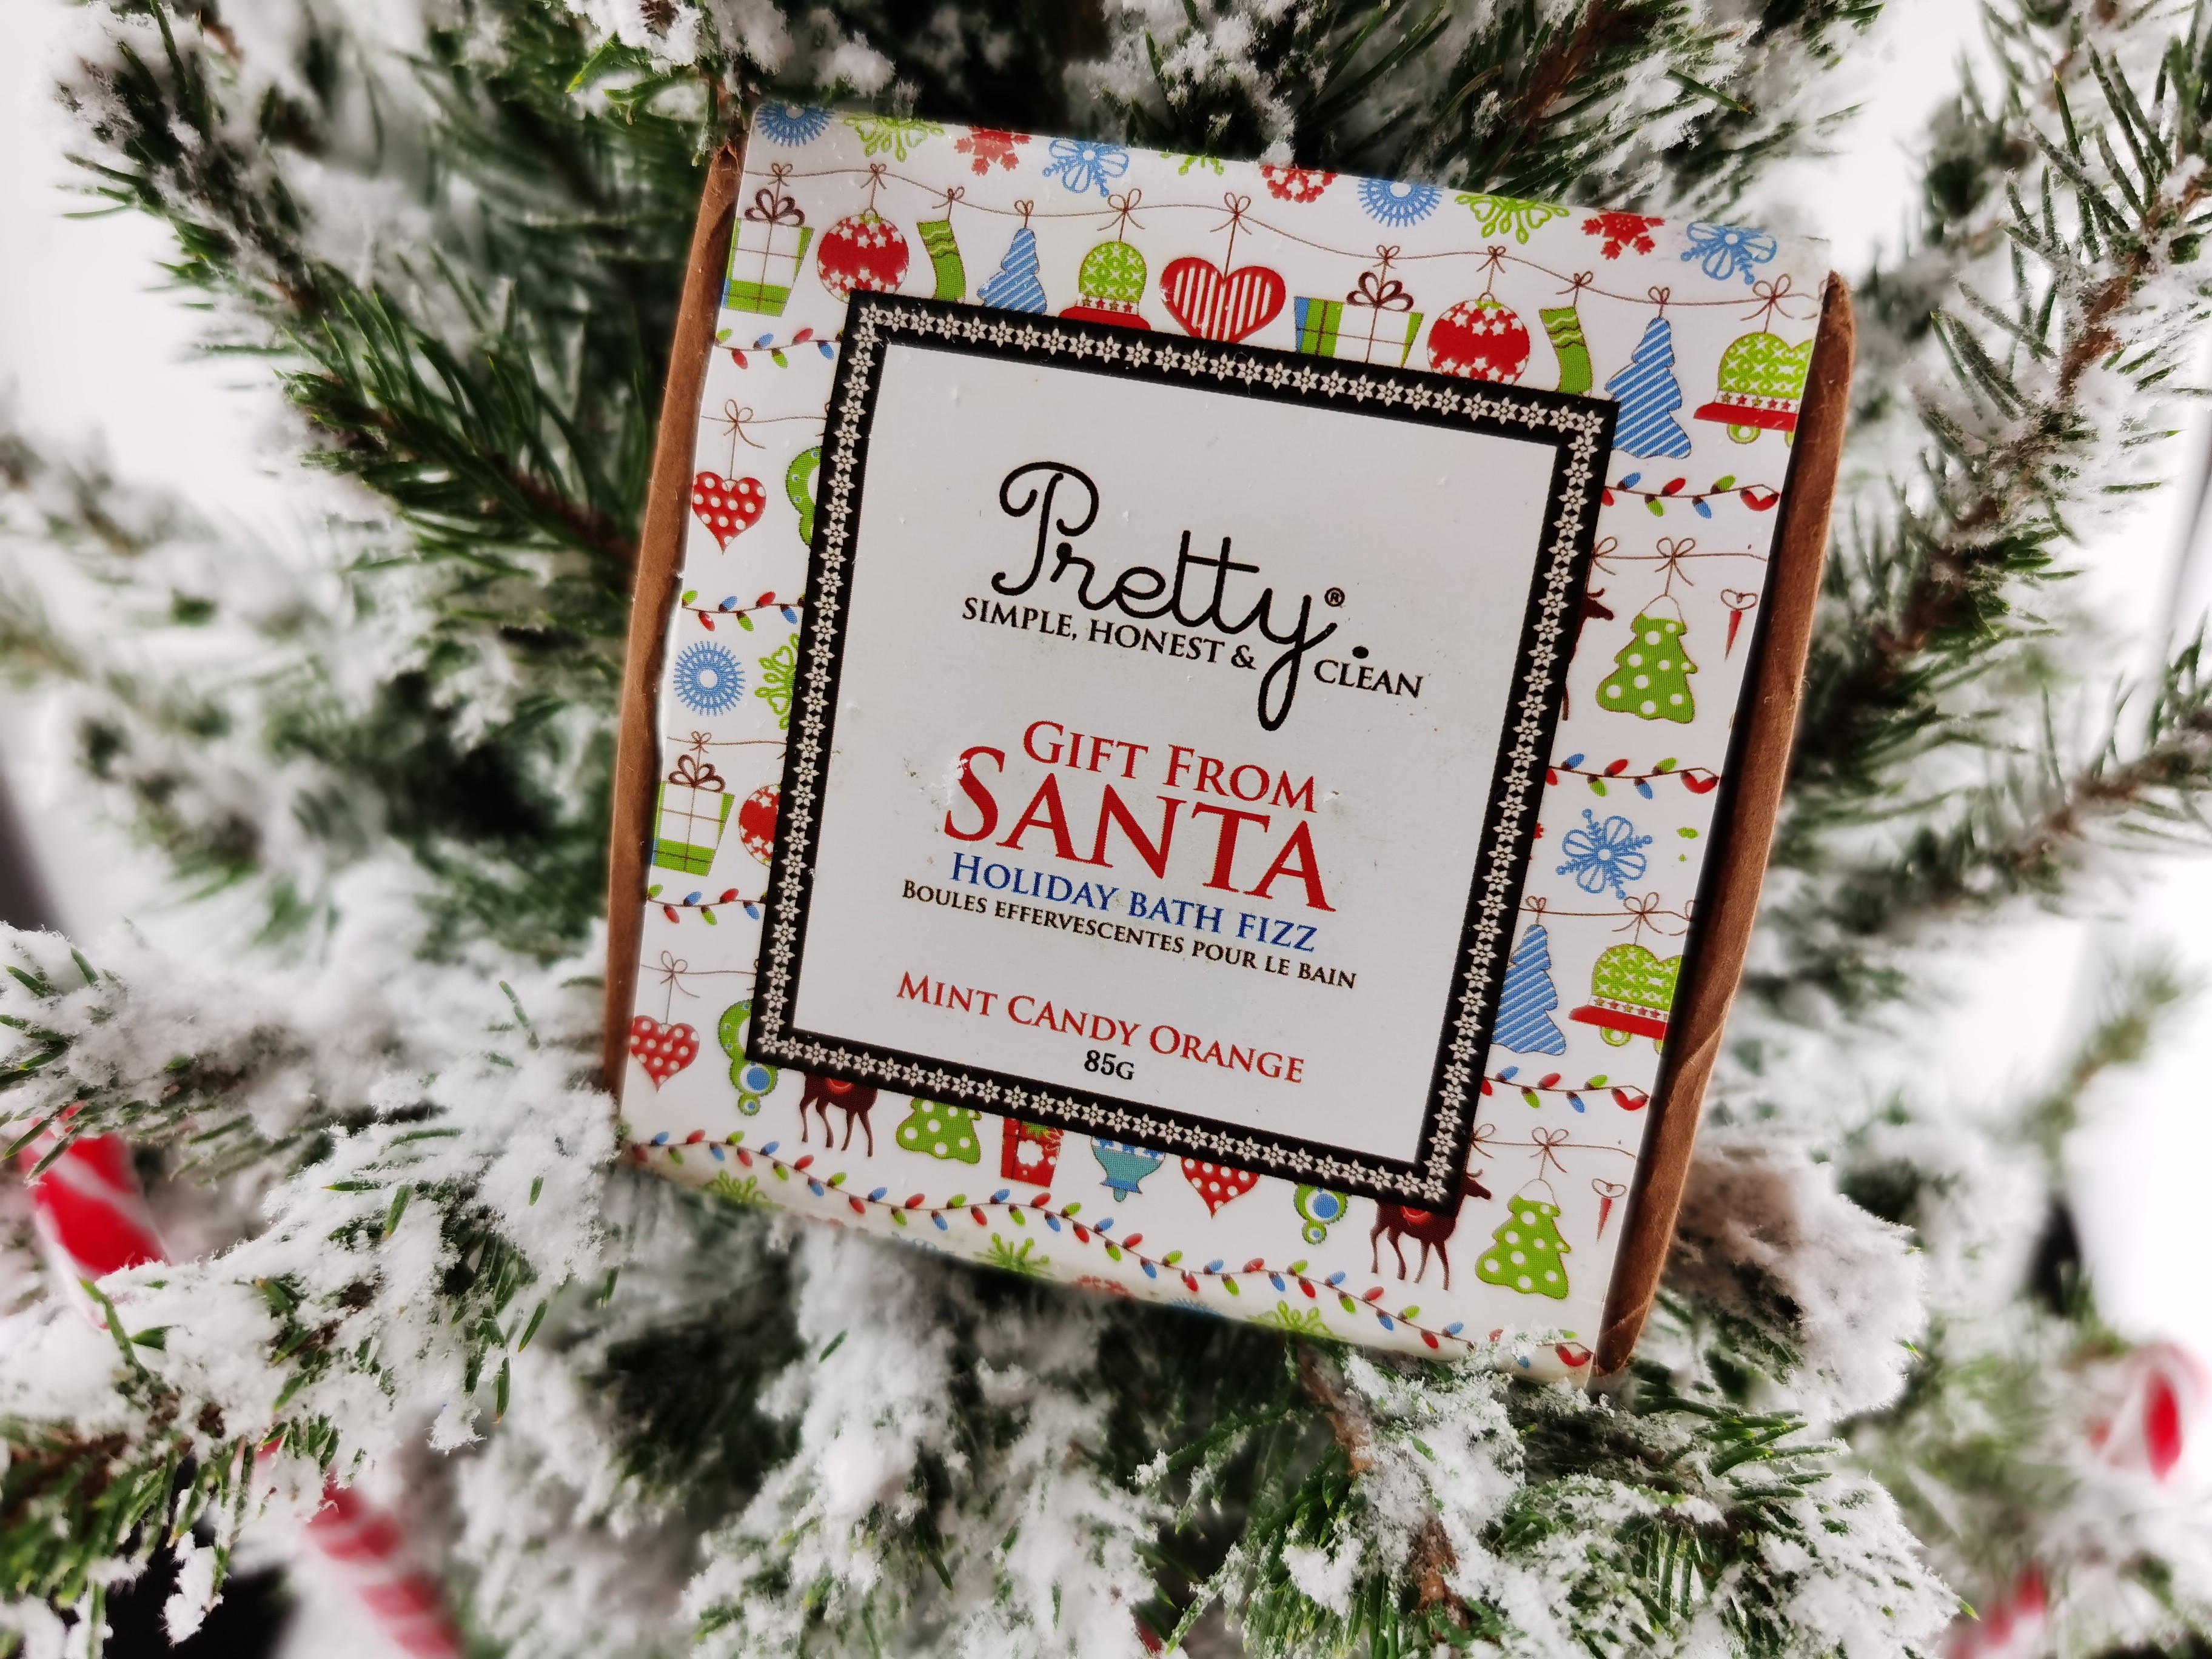 Gift From Santa Holiday Bath Fizz by Pretty Organic Cosmetics in a tree